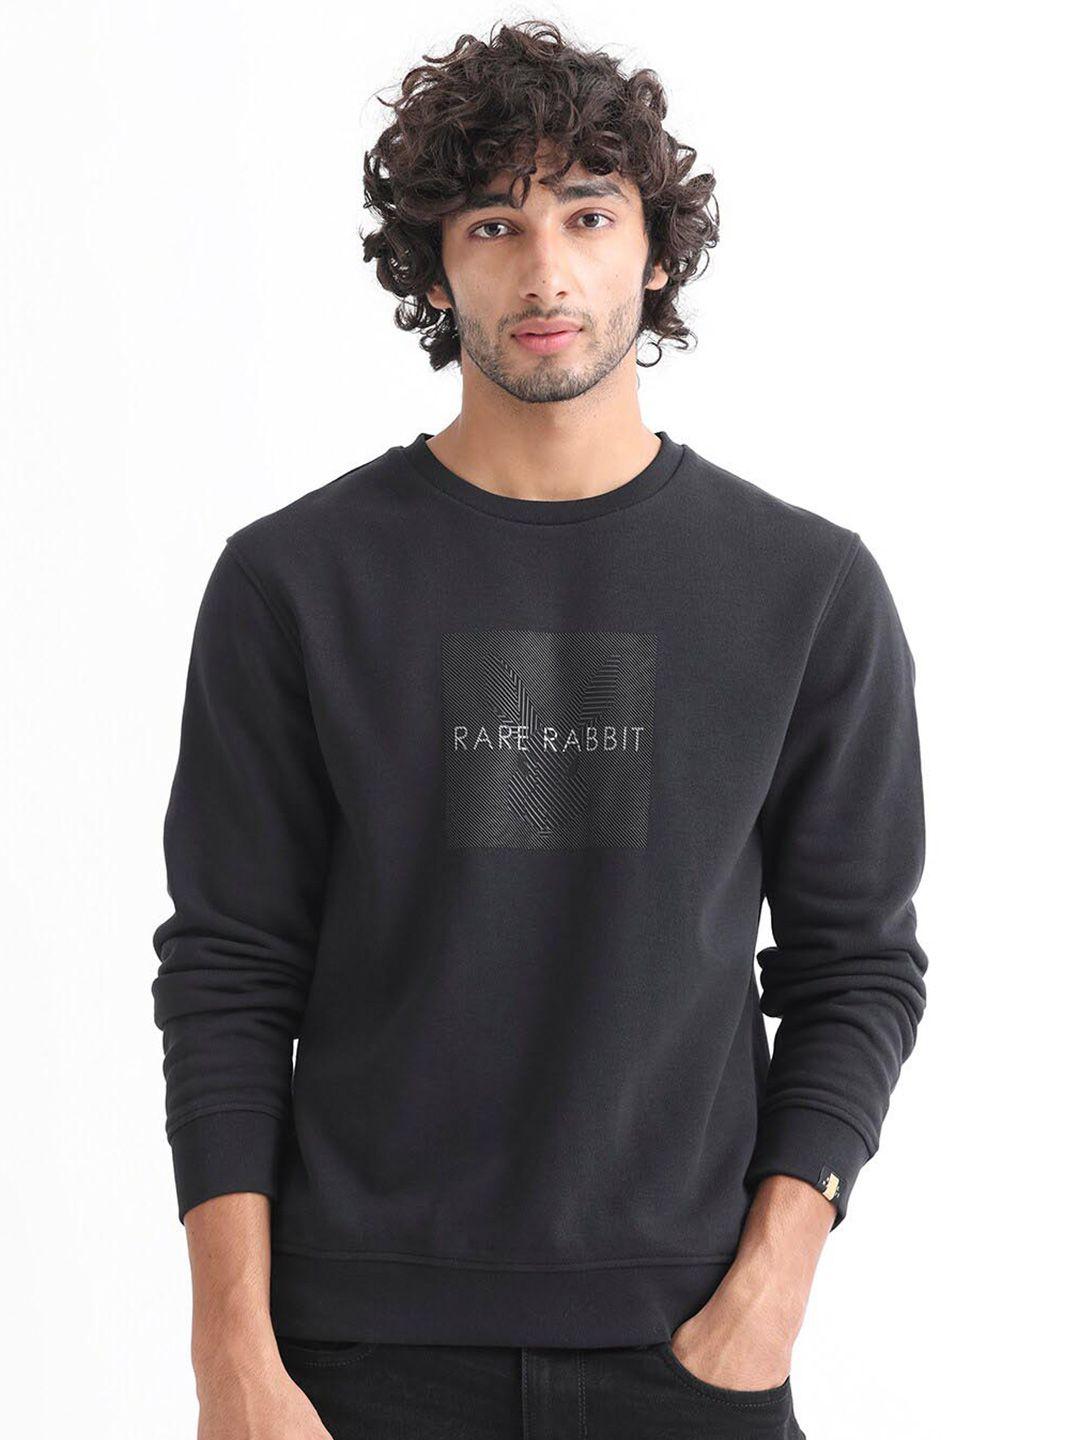 rare rabbit typography printed cotton sweatshirt